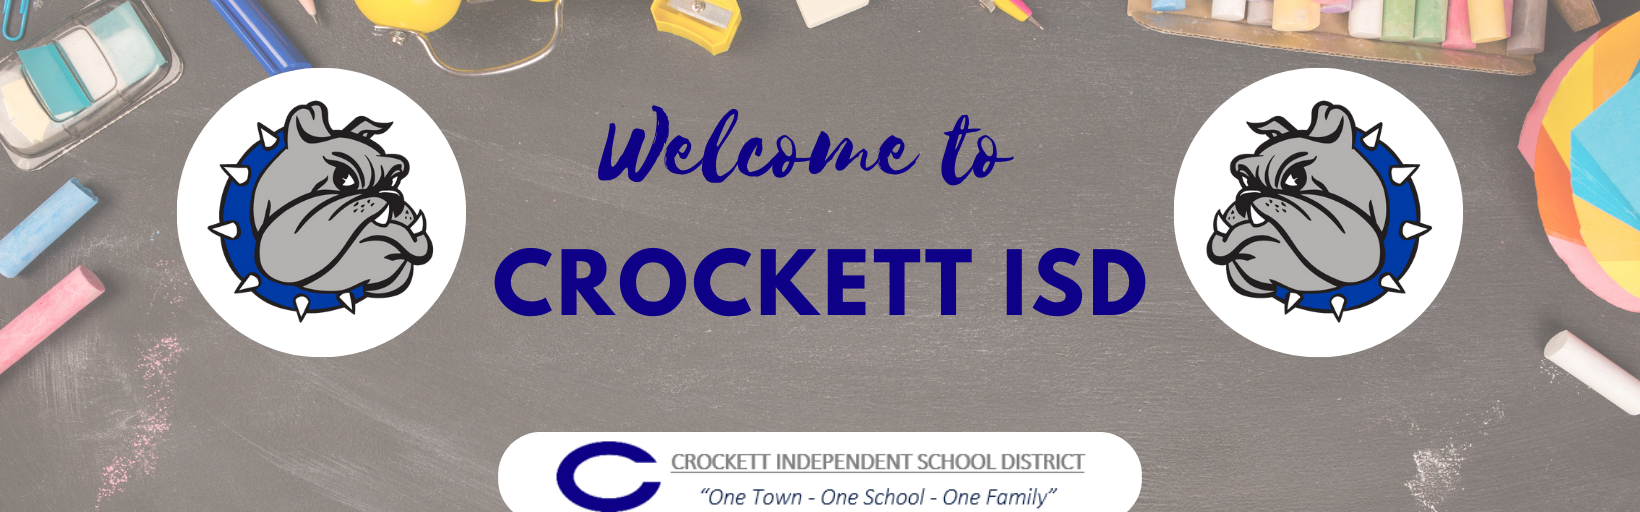 welcome to crockett isd